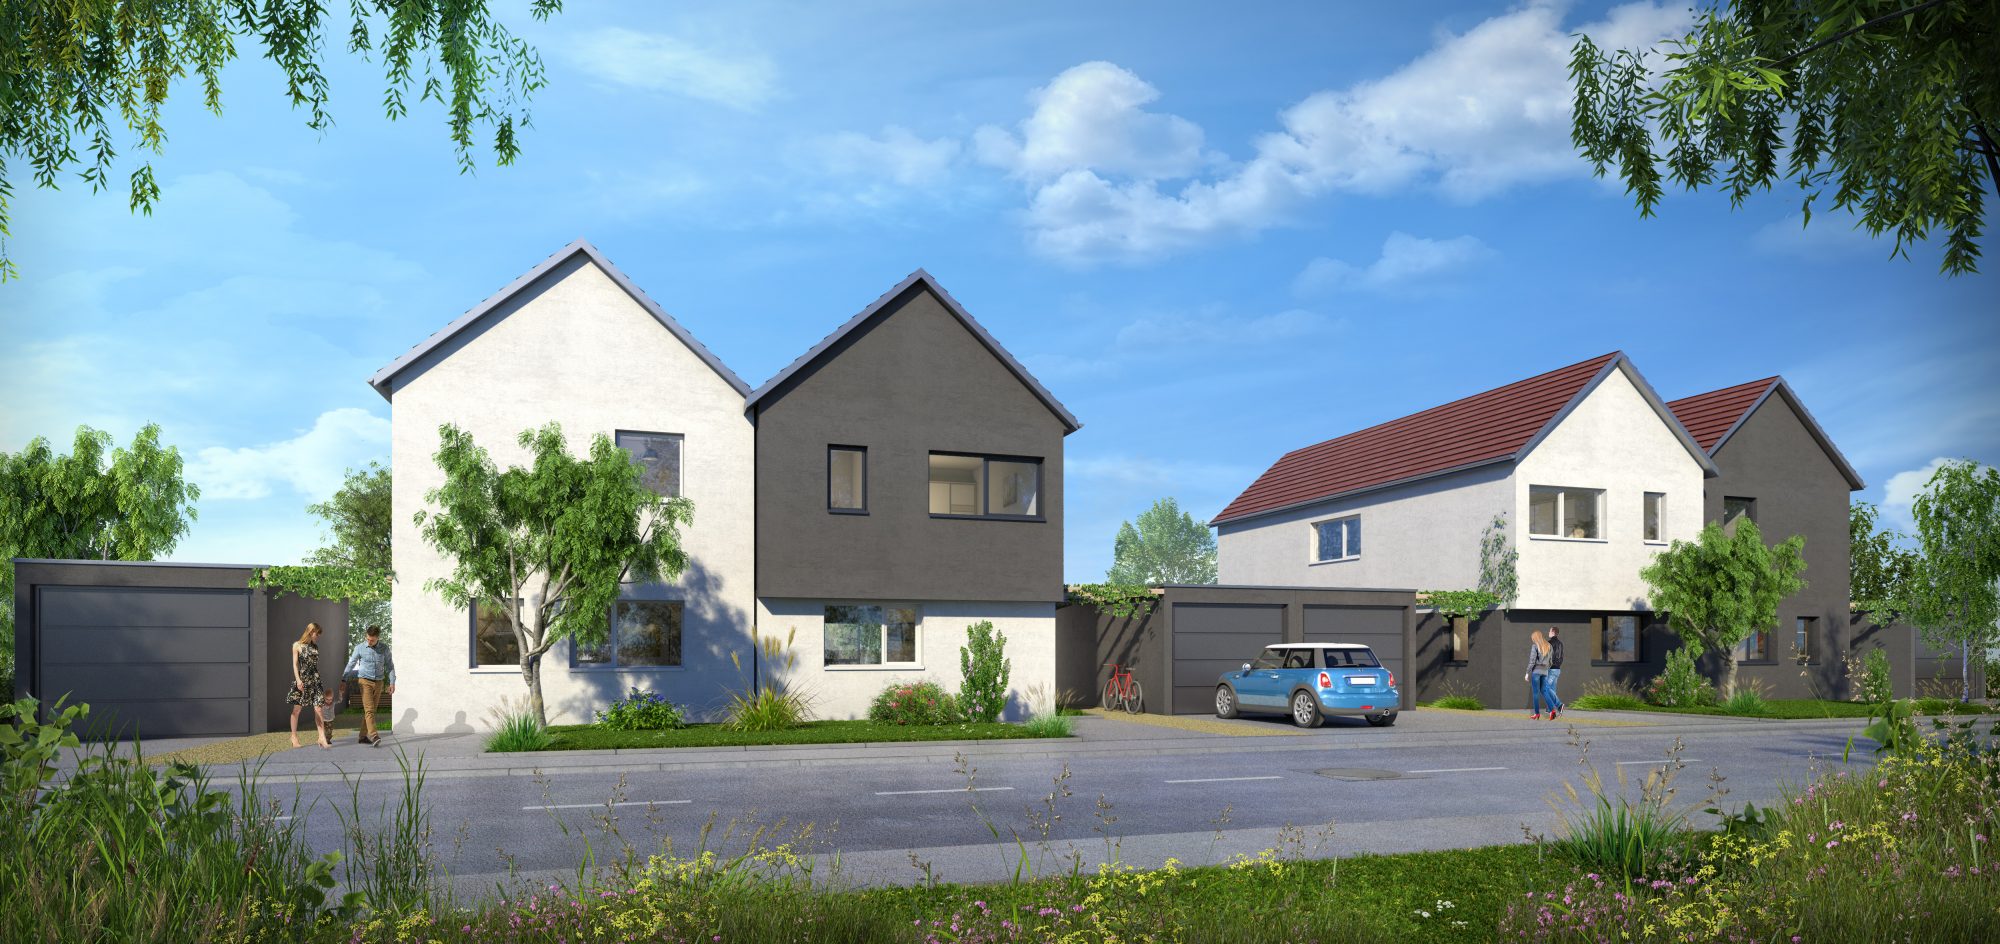 Vente Maison 105m² 4 Pièces à Ernolsheim-Bruche (67120) - Origami